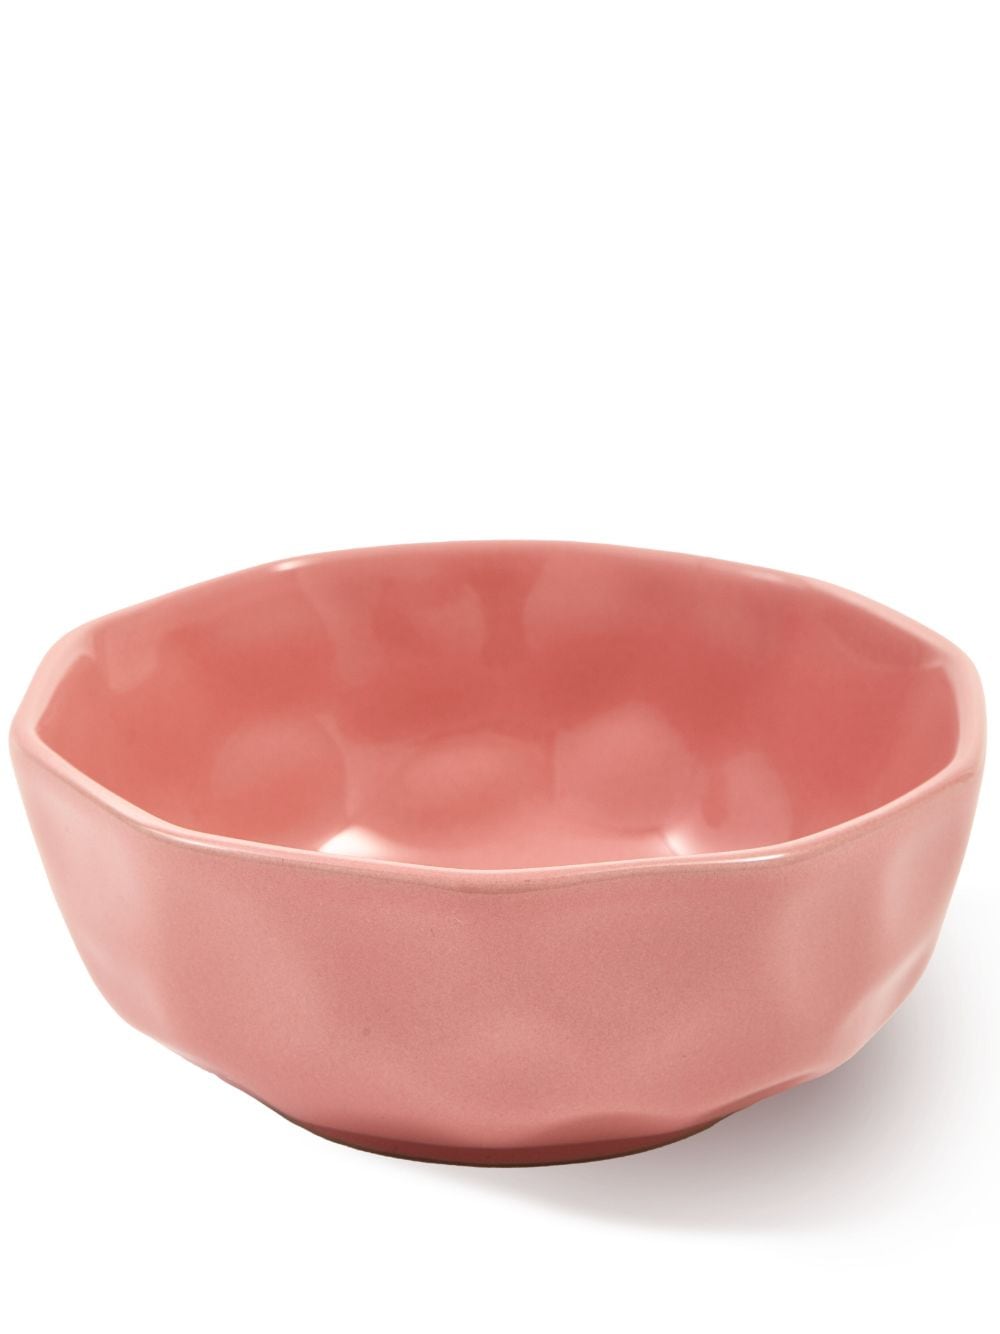 POLSPOTTEN Koa glazed-finish bowls (set of four) - Pink von POLSPOTTEN